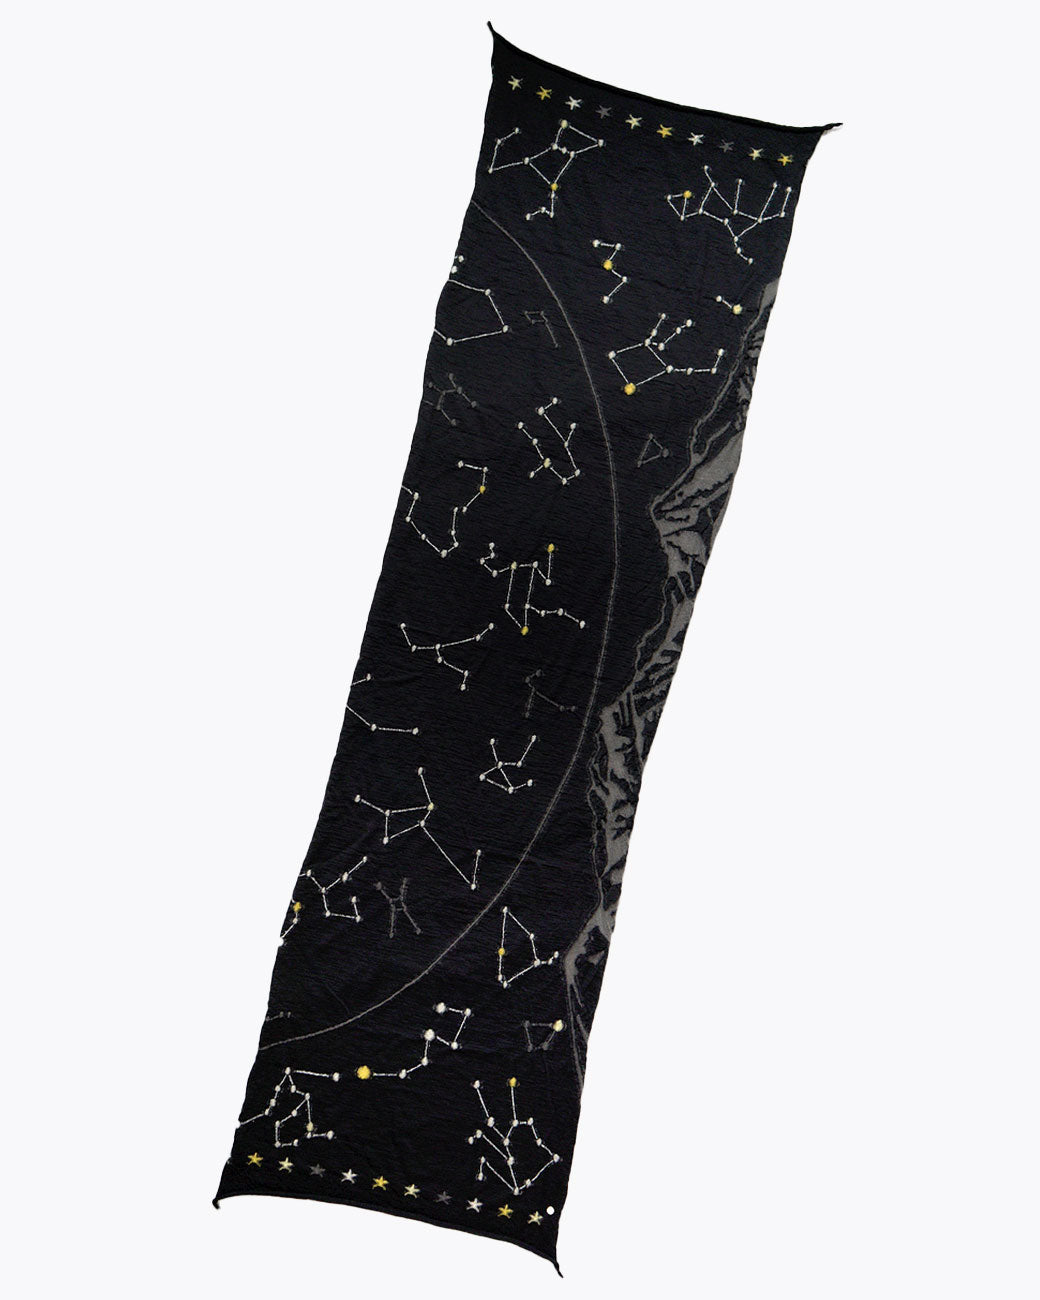 Kapital constellation scarf in black, shown laying flat.